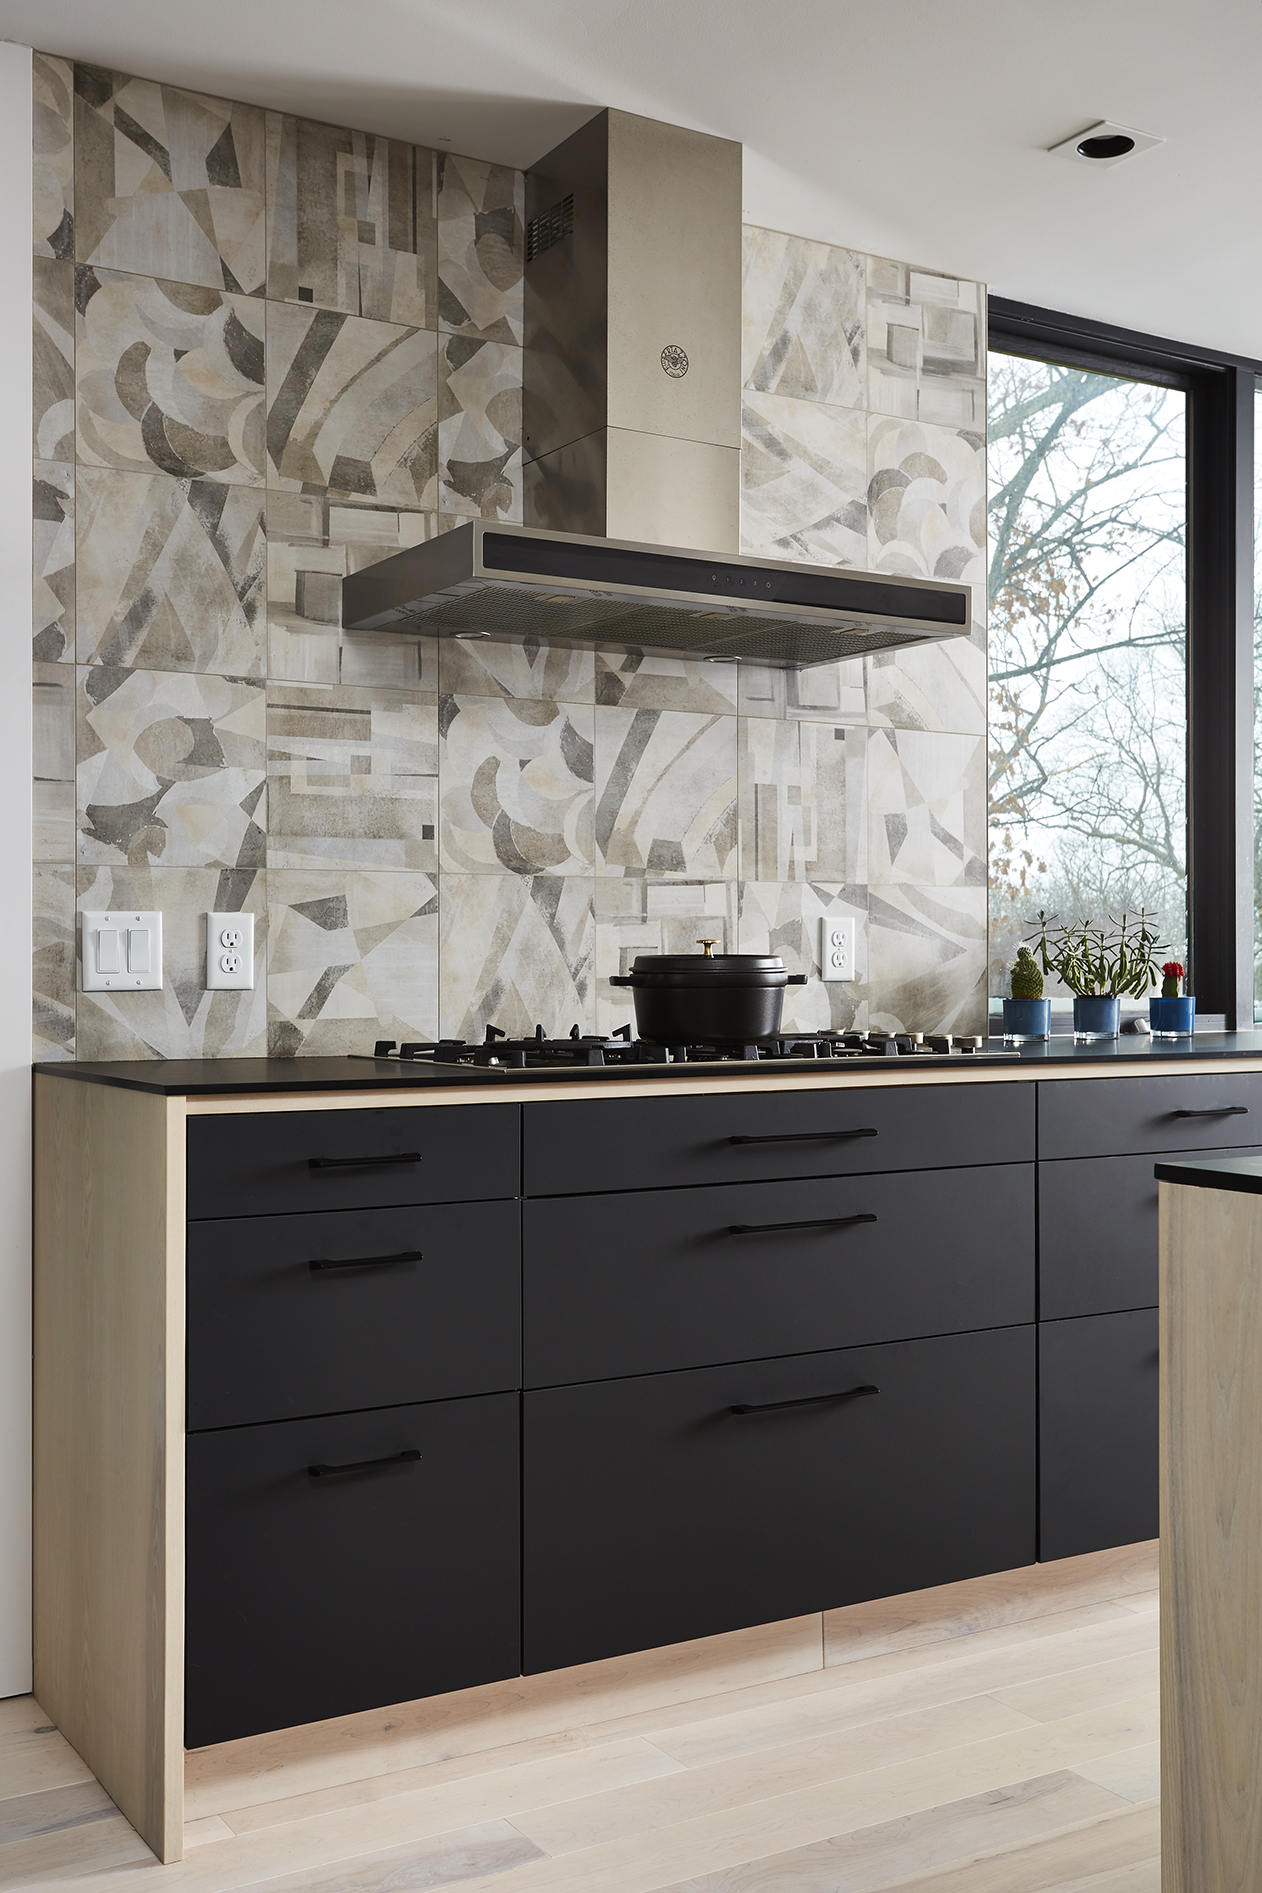 Black and wood cabinetry detail with graphic backsplash tile behind range